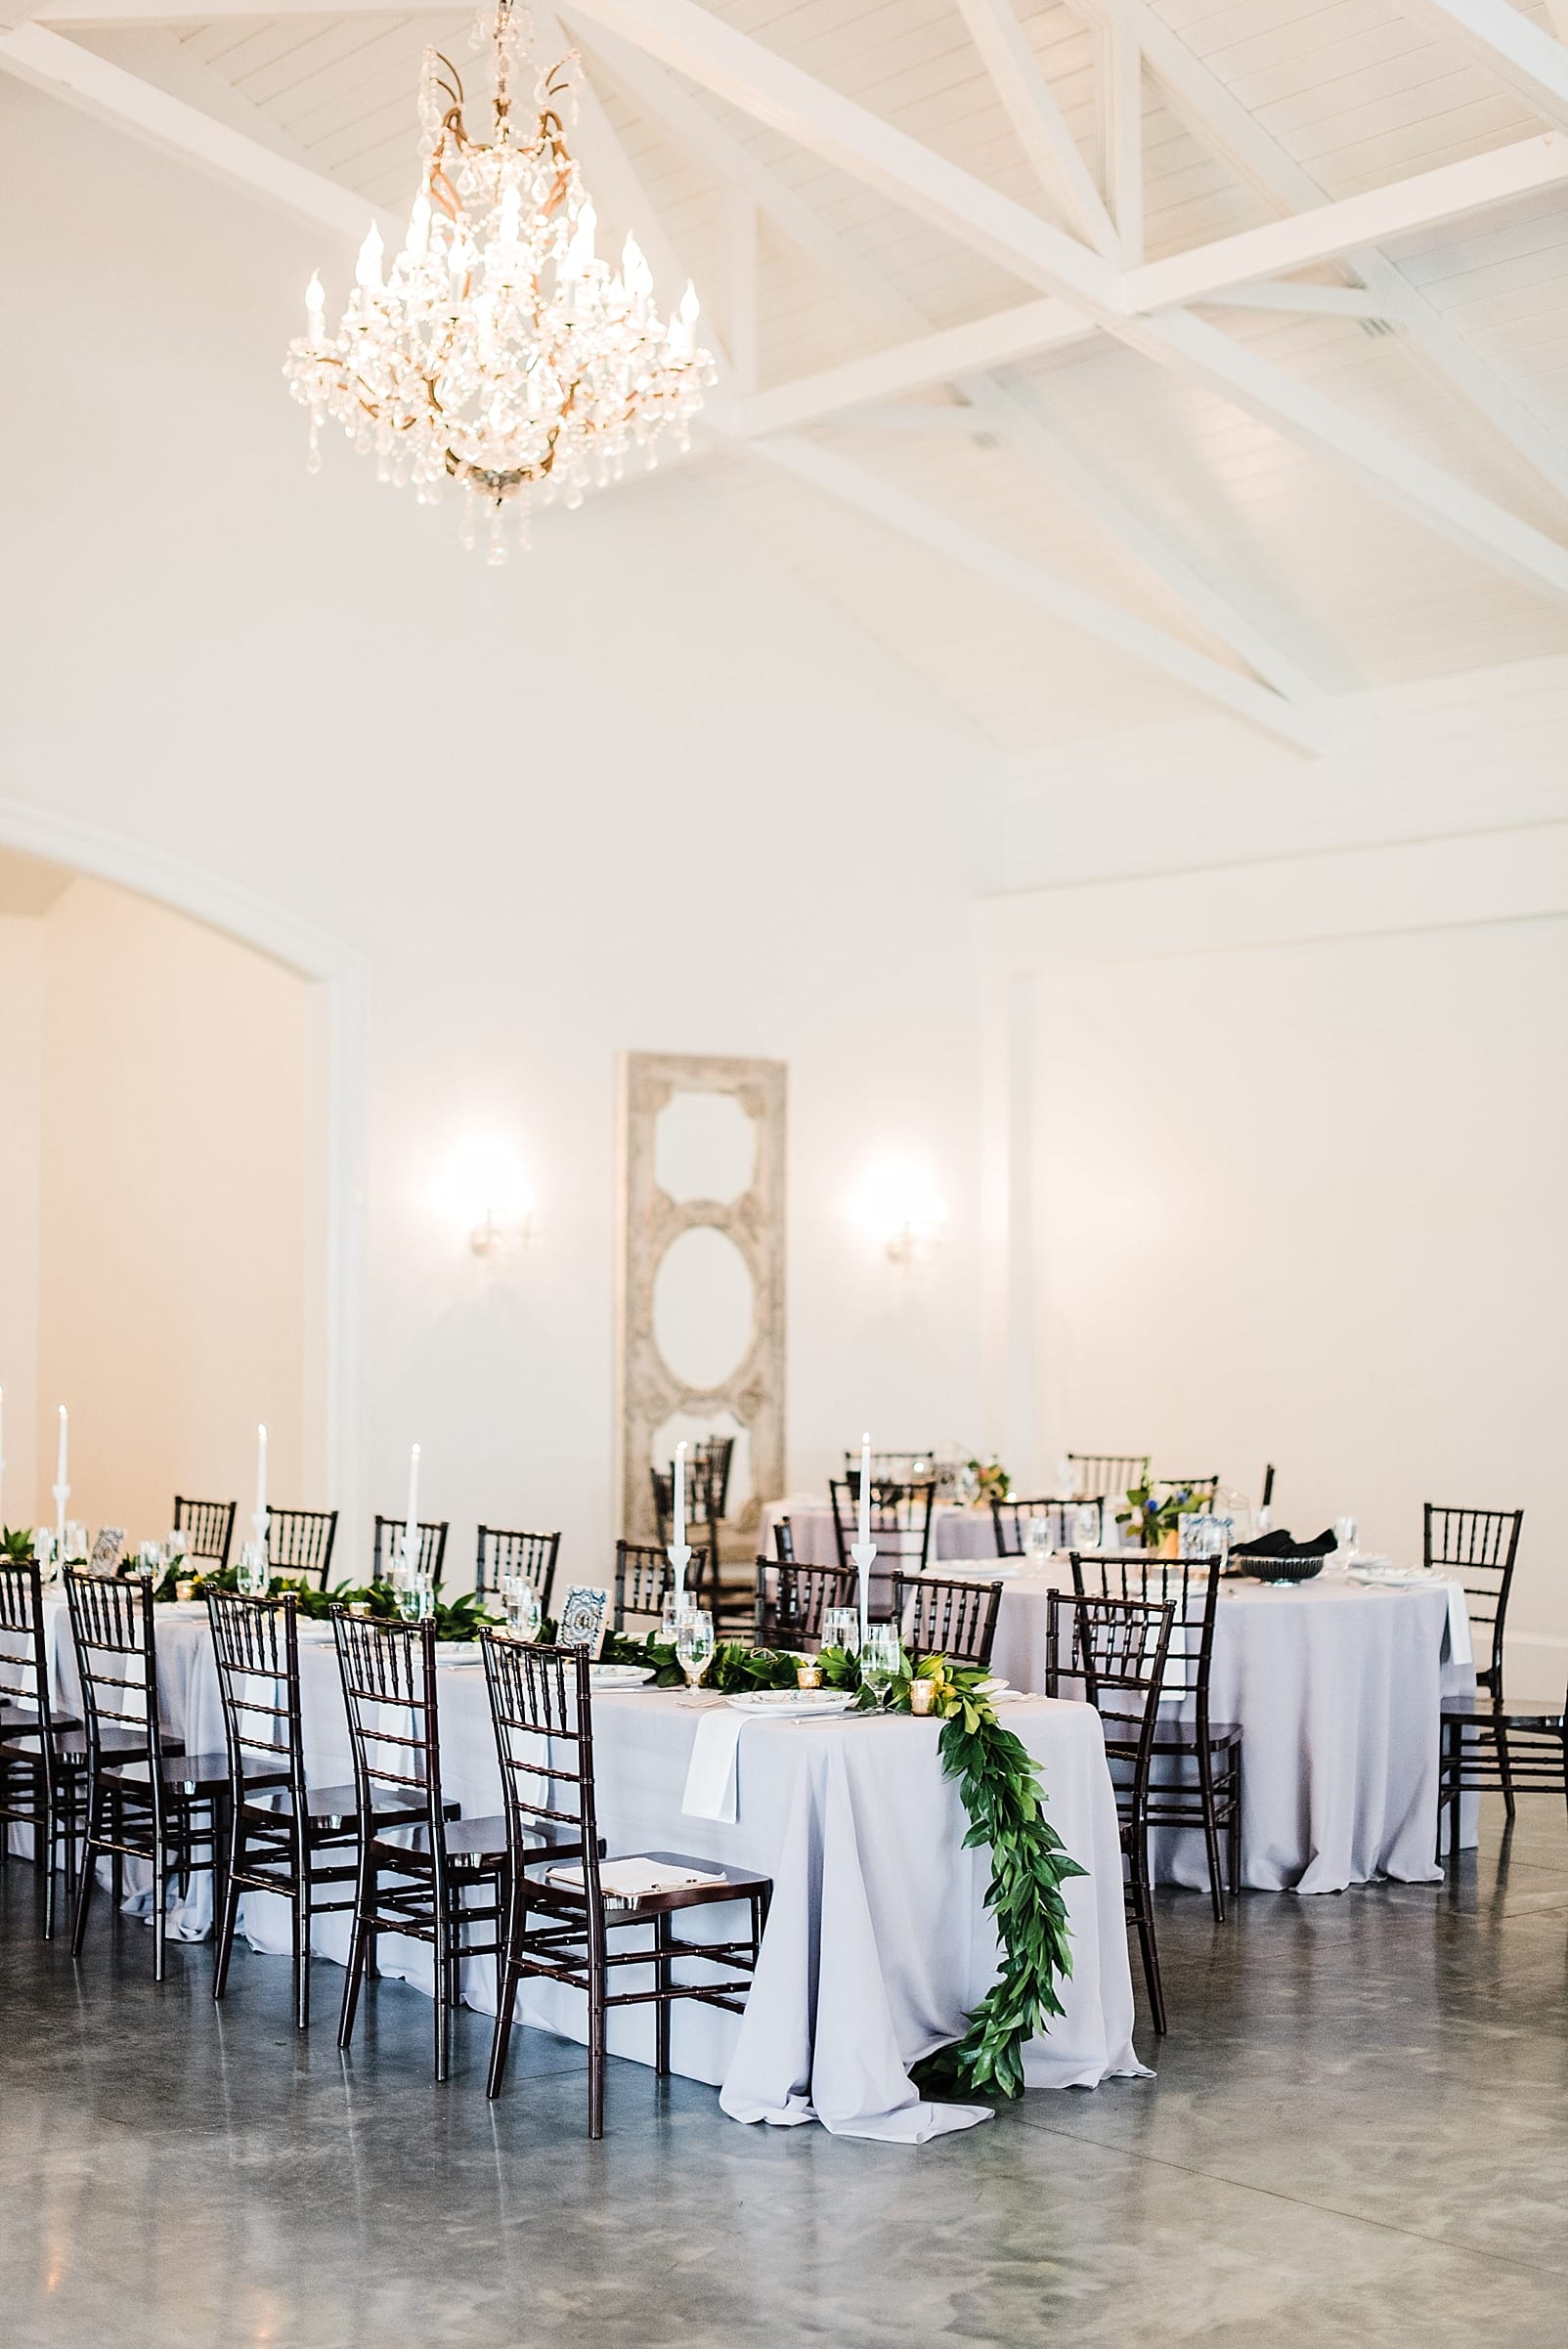 merrimon wynne wedding photographer indoor wedding reception inspiration wedding venue with white walls photo